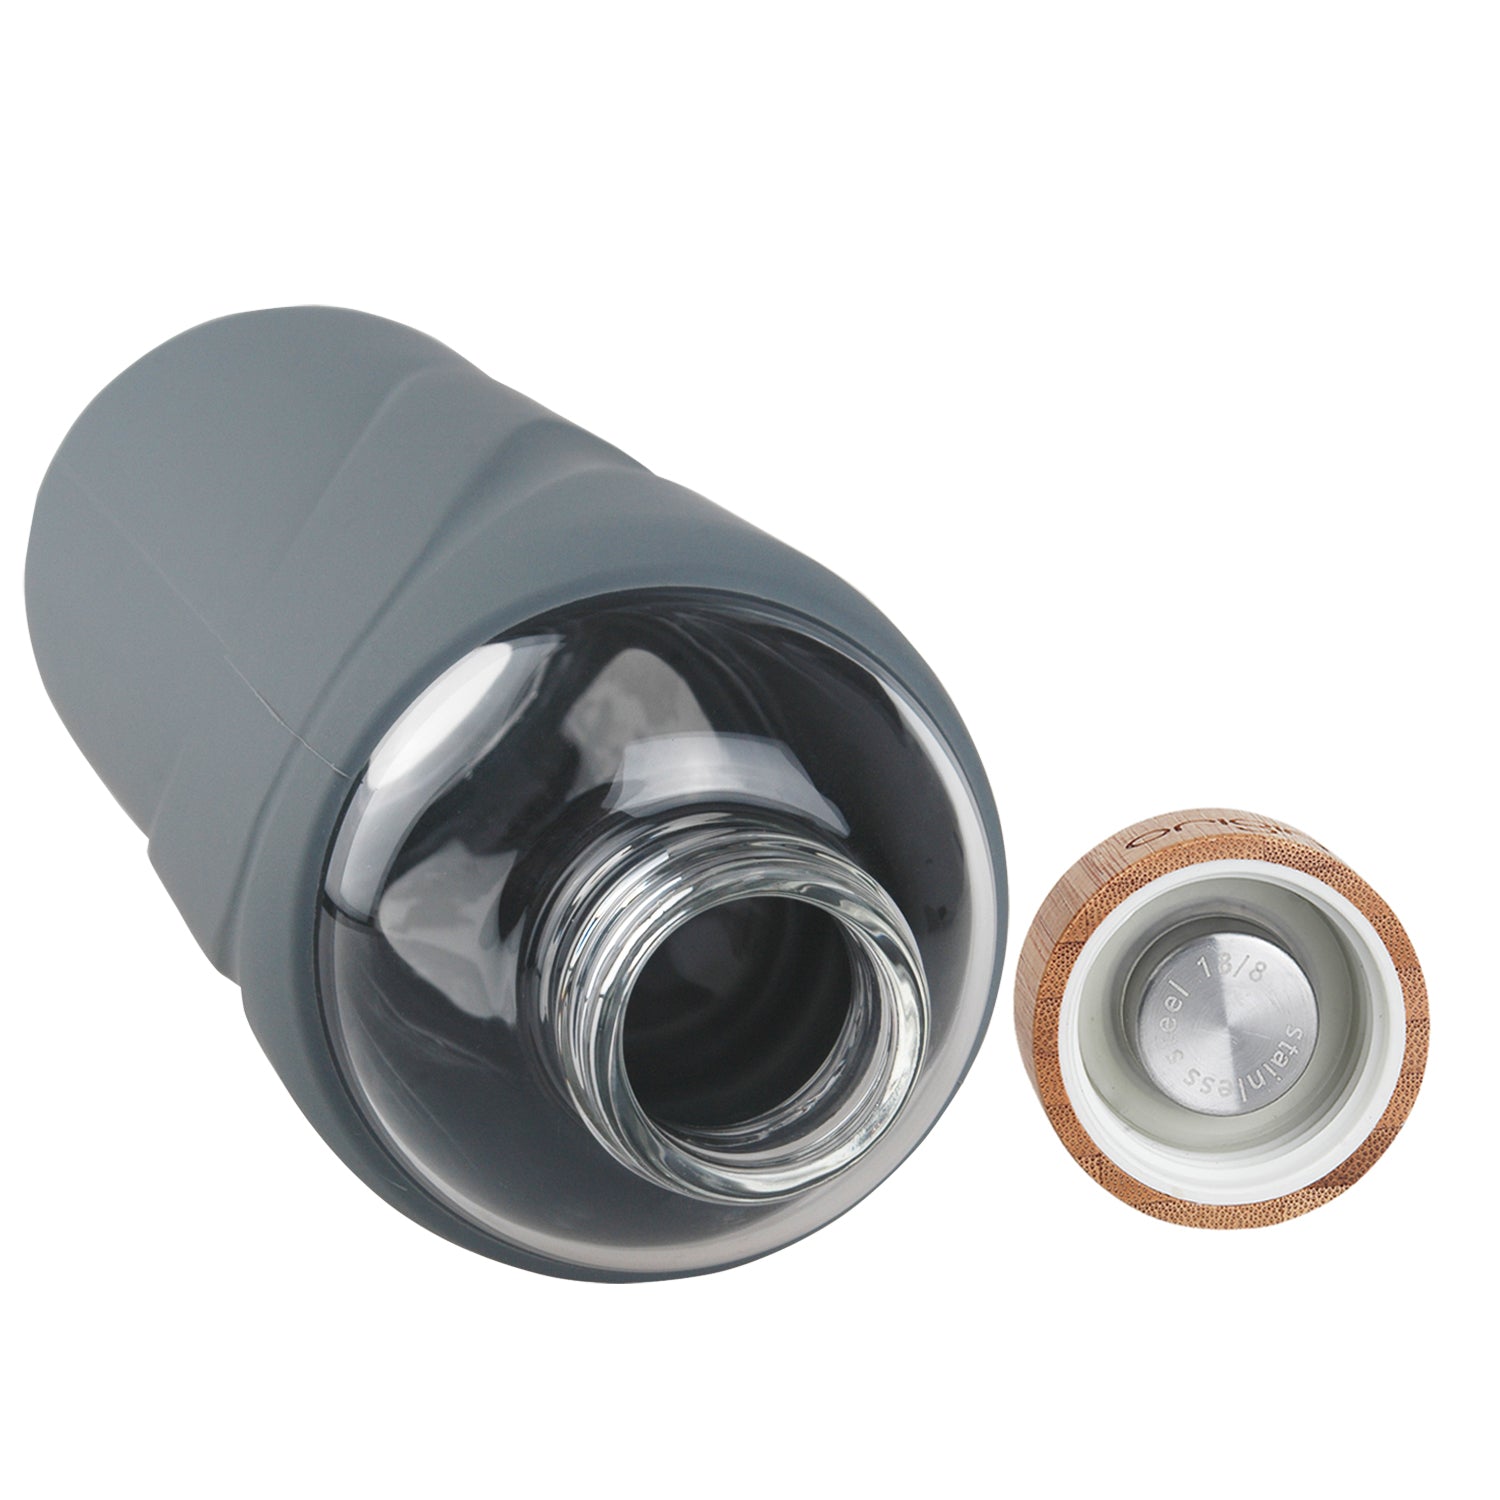 Silicone Reusable Heat Resistant Nonslip Glass Bottle Sleeve 6cm Dia - Gray  - 2.4 x 2.3(D*H) - Bed Bath & Beyond - 28769546